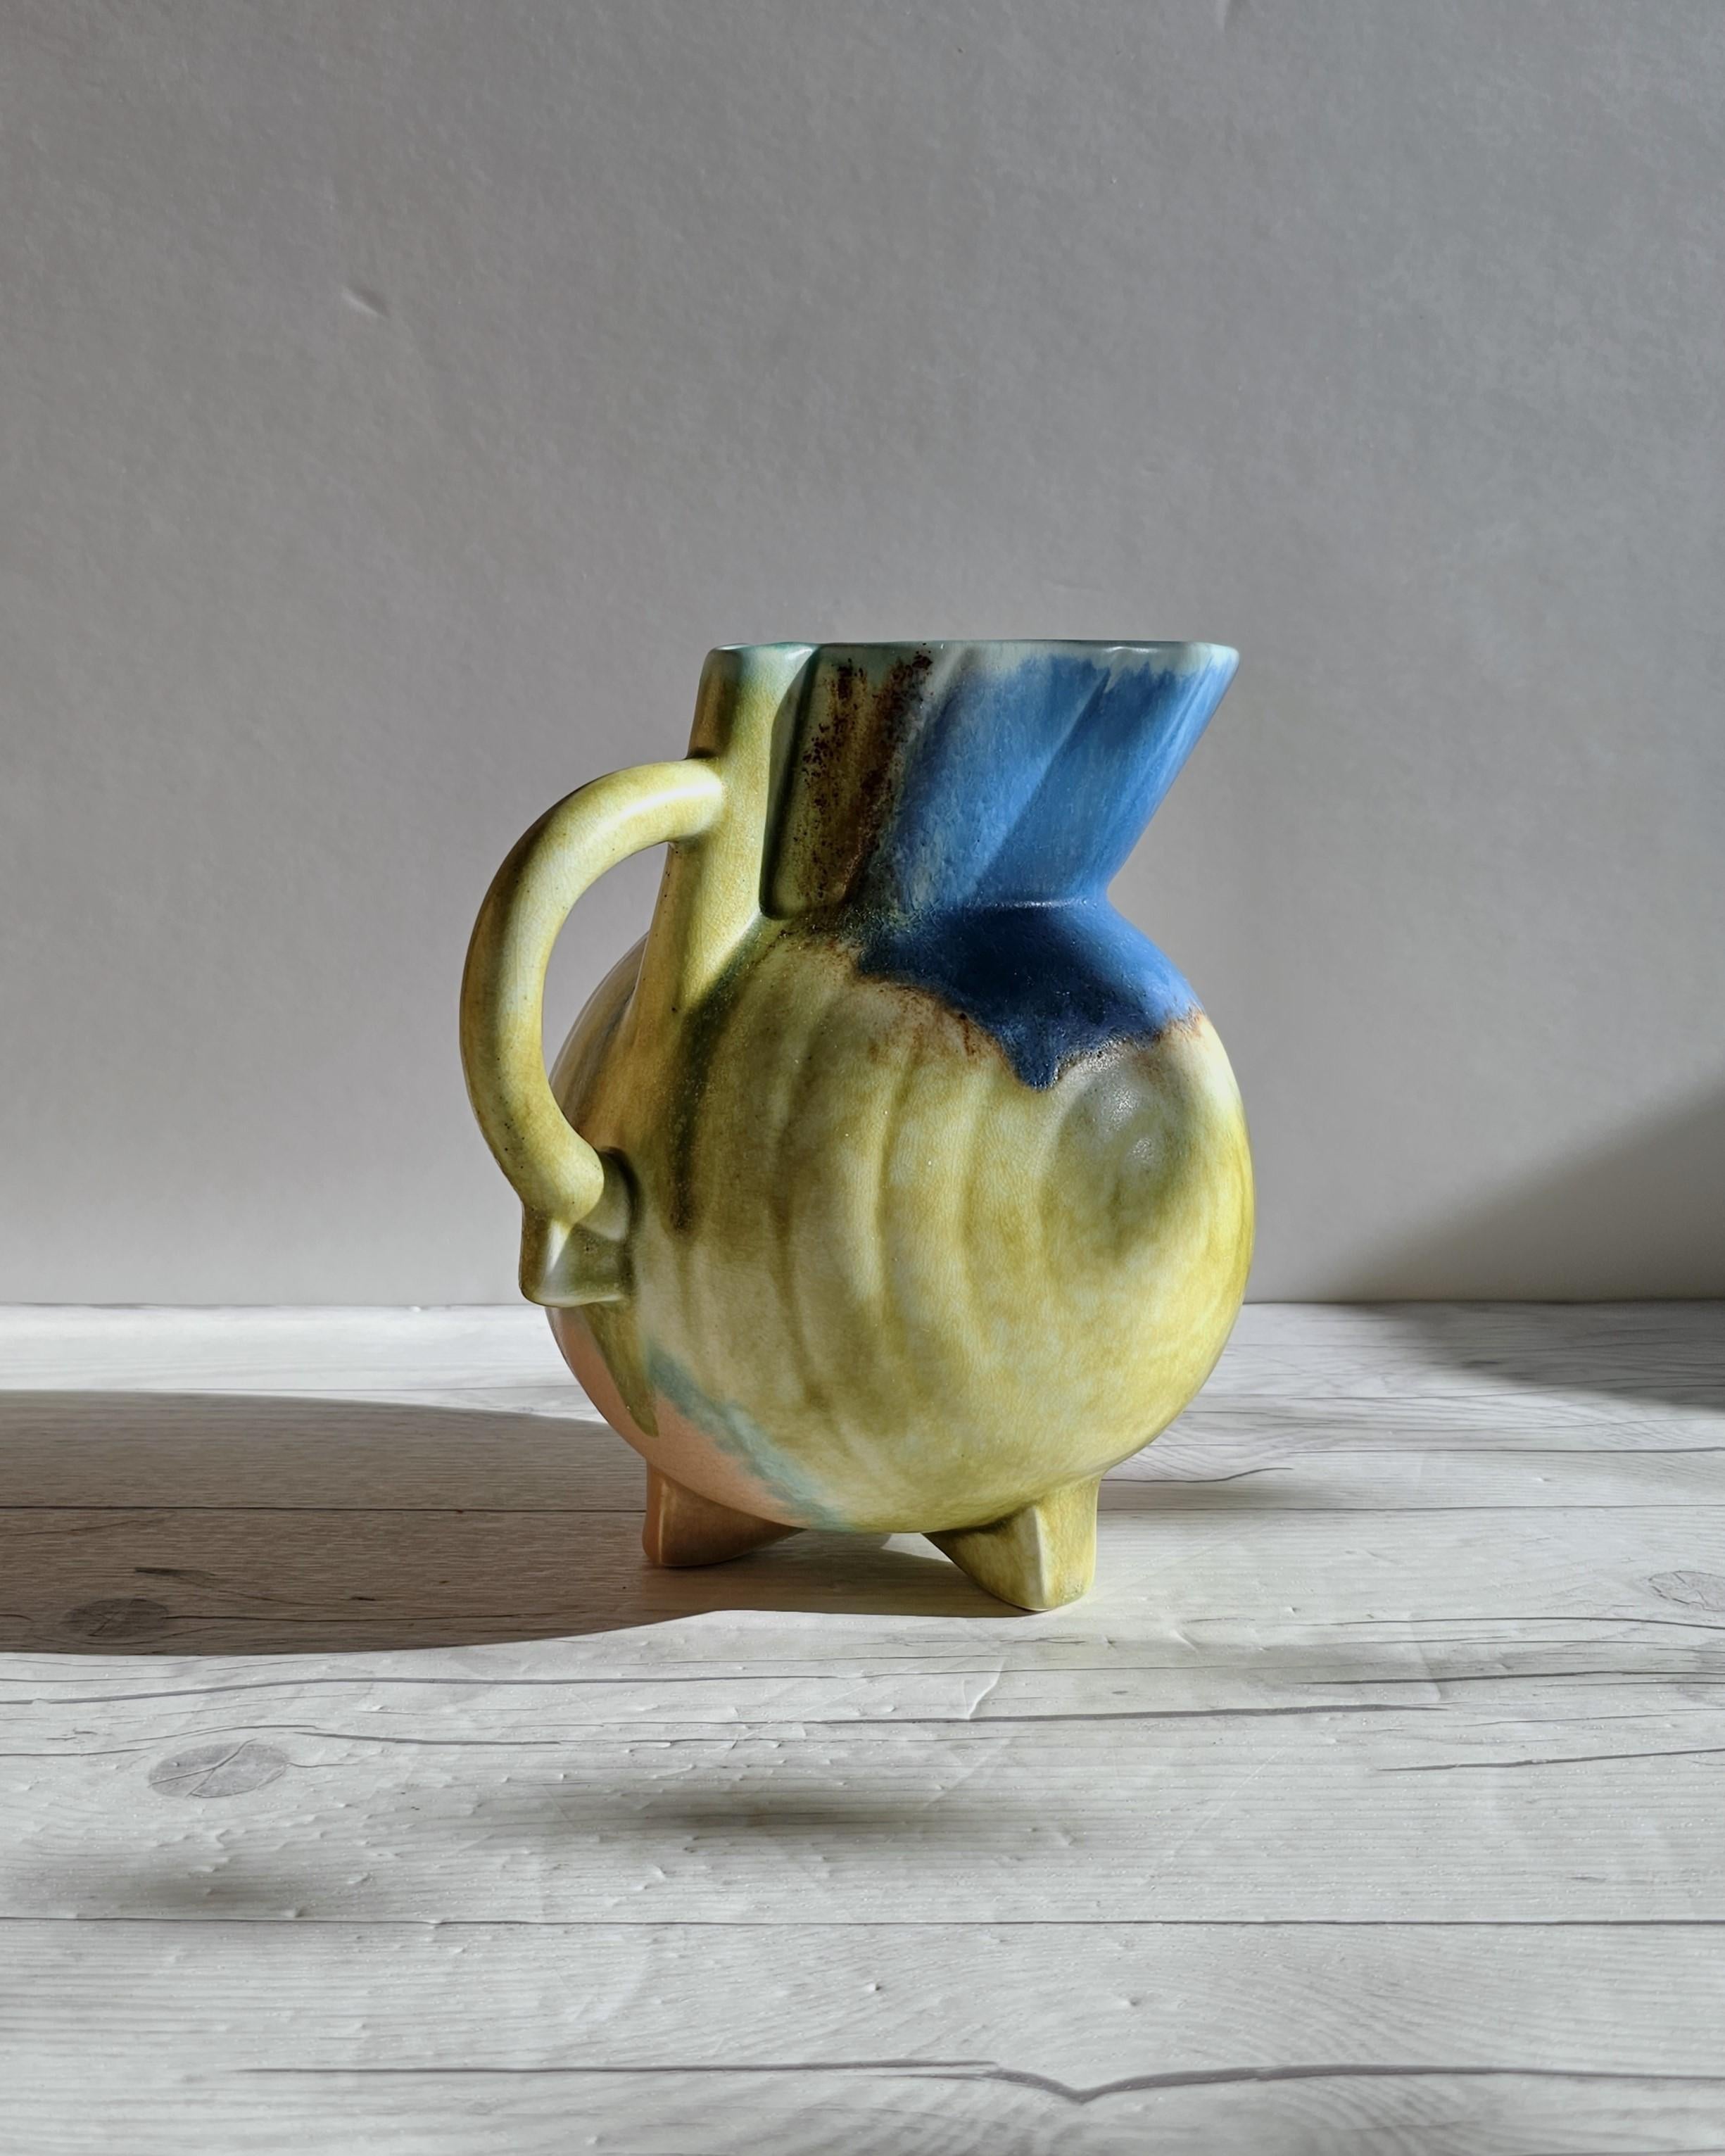 British Beswick Pottery, Clarice Cliff Era, Art Deco Streamline Moderne Footed Jug Vase For Sale